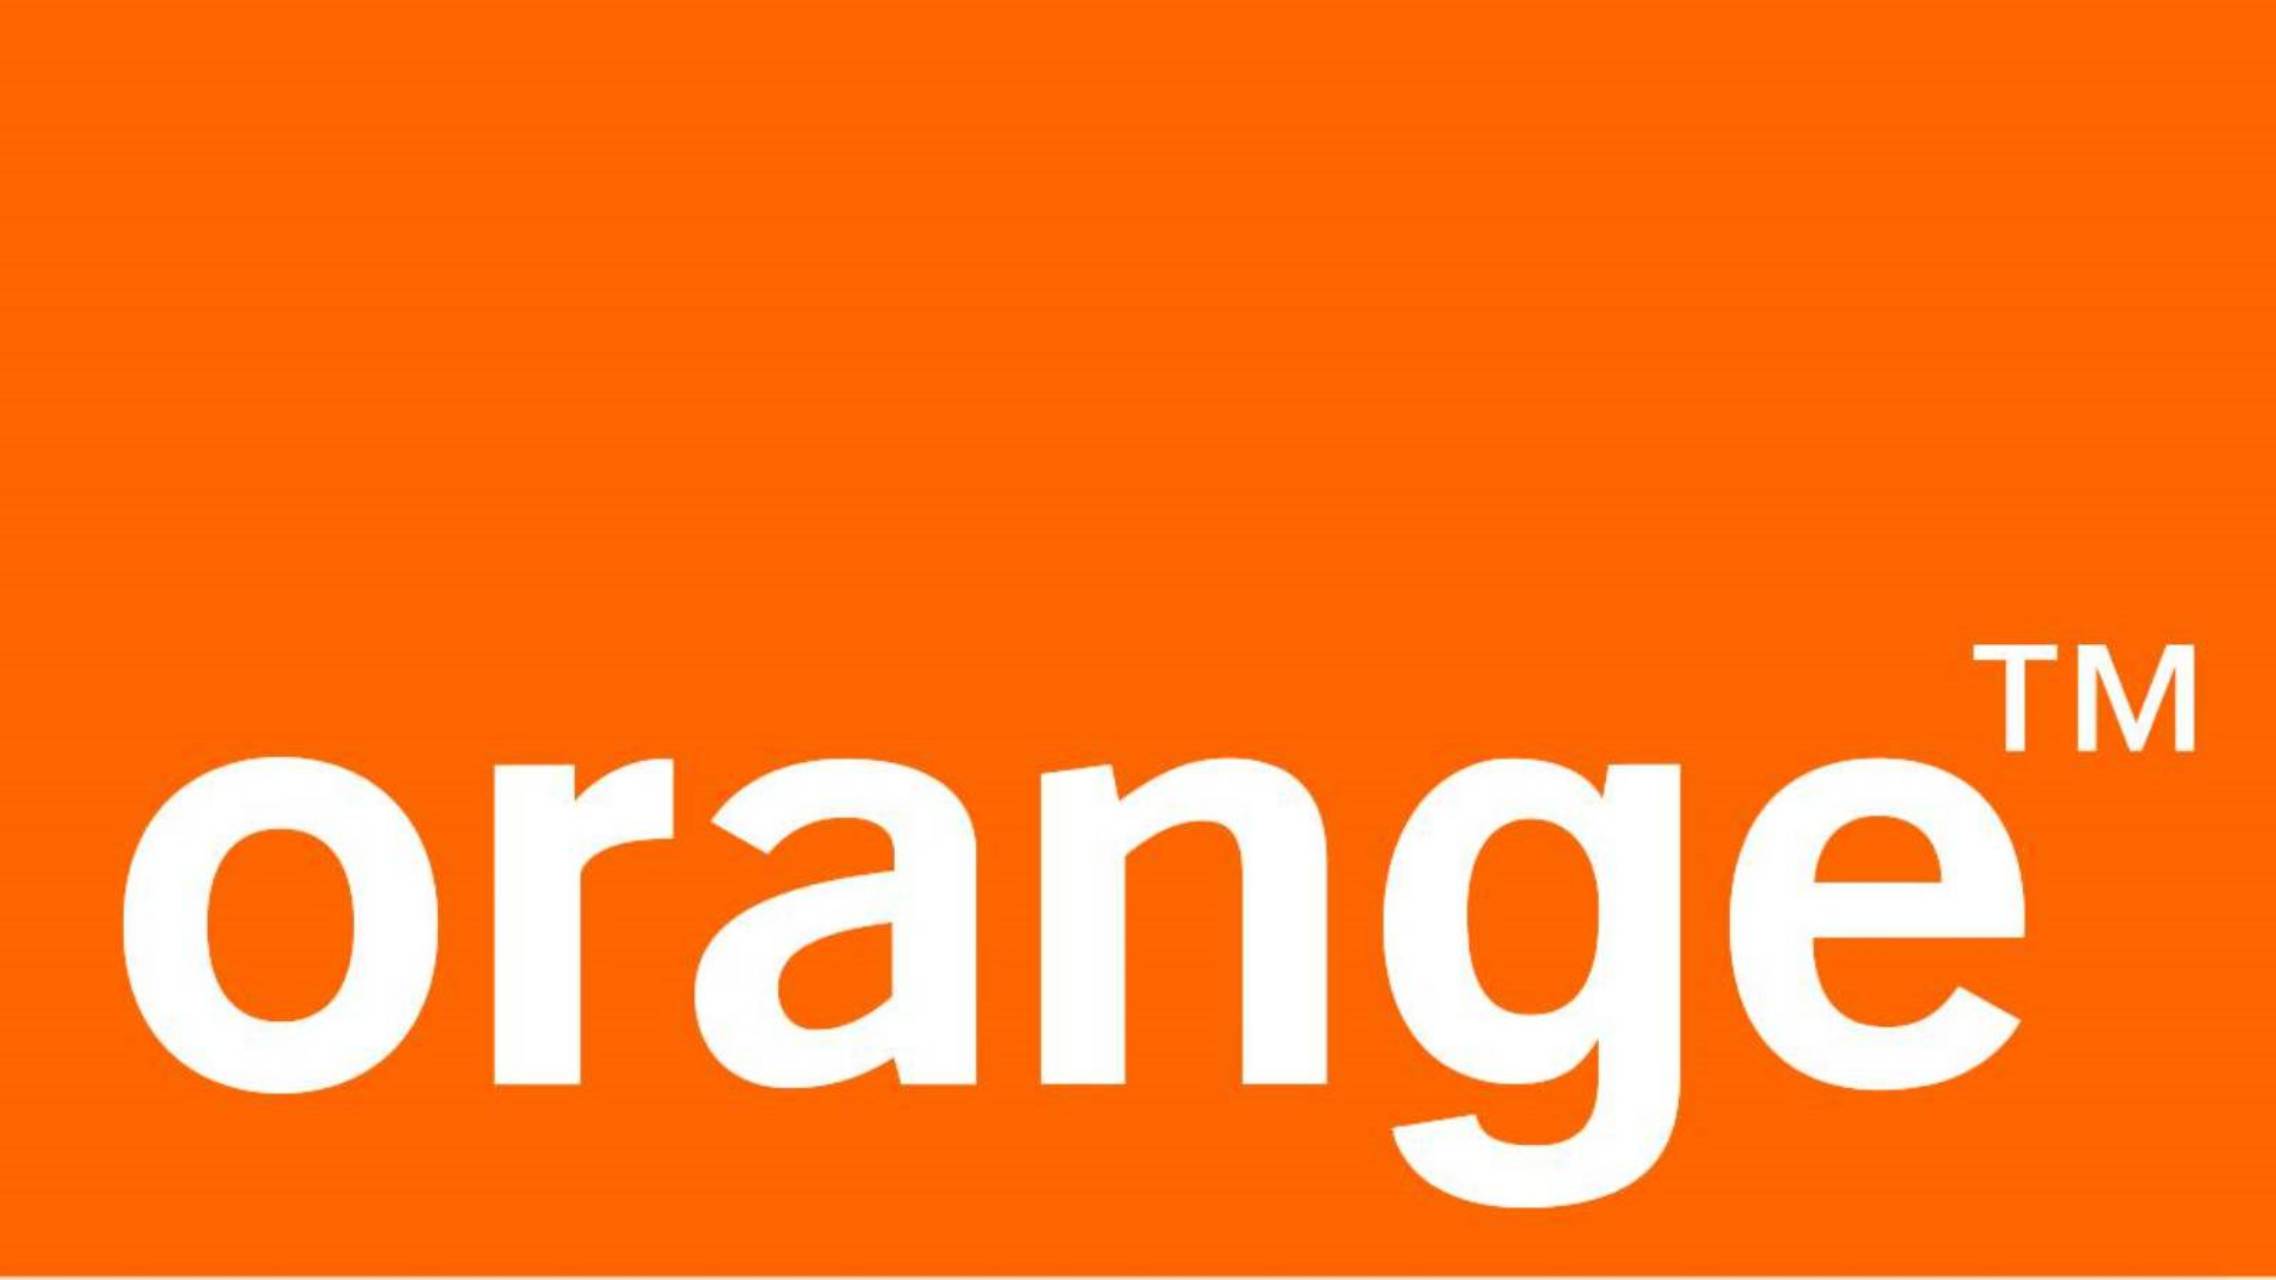 Free orange